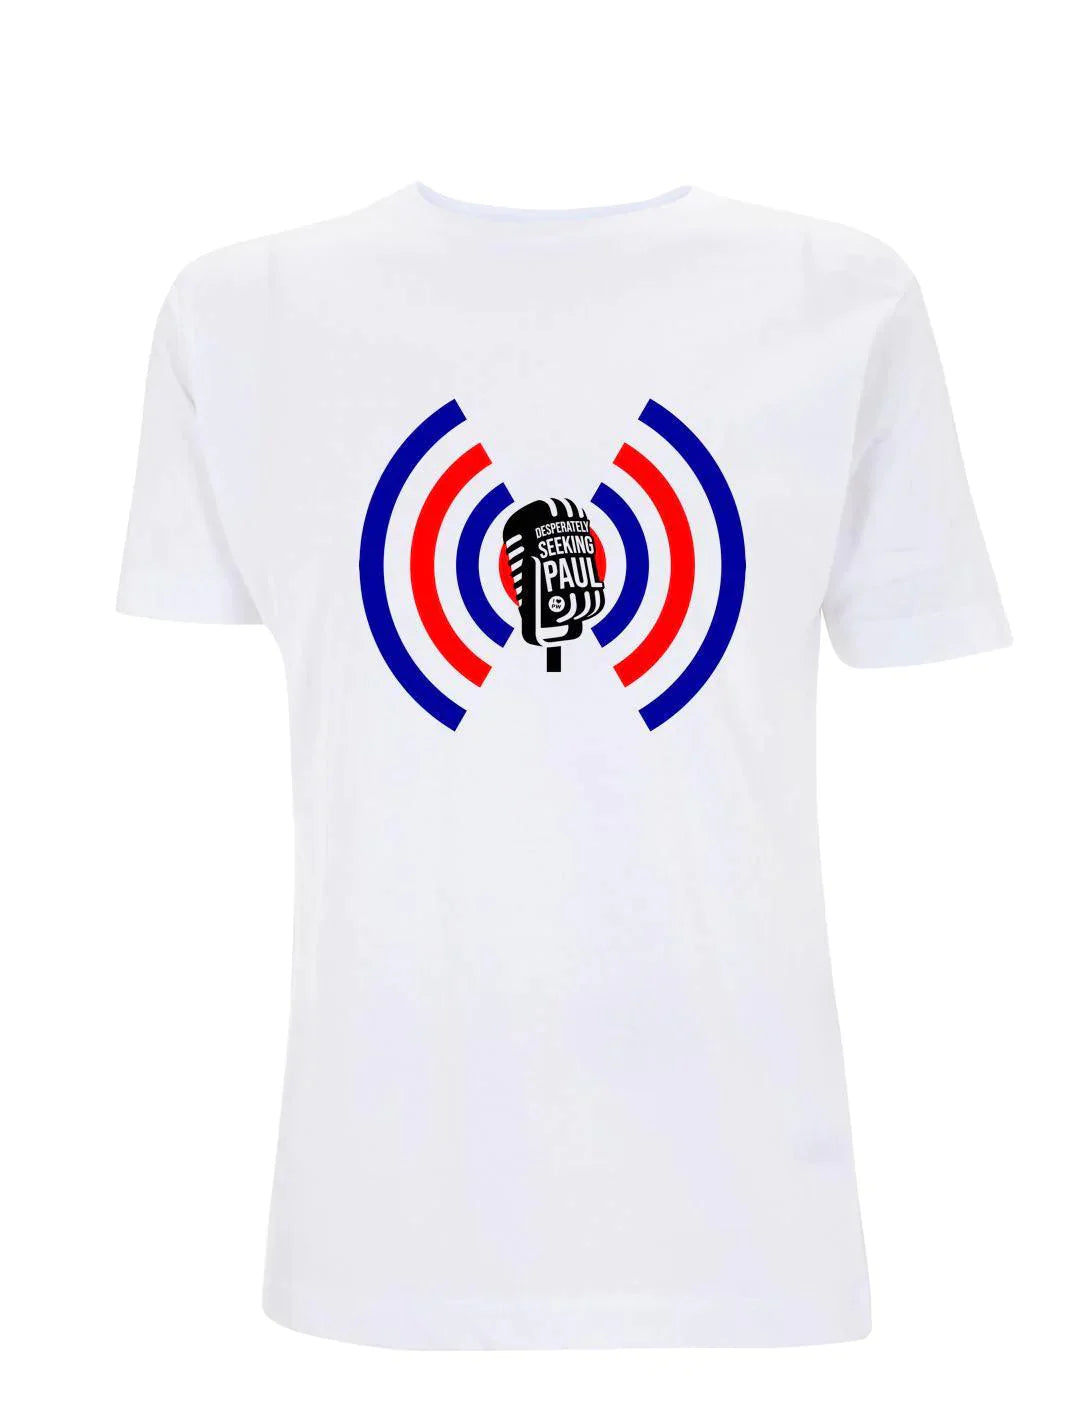 THE PAUL WELLER FAN PODCAST LOGO: T-Shirt Official Merchandise - SOUND IS COLOUR